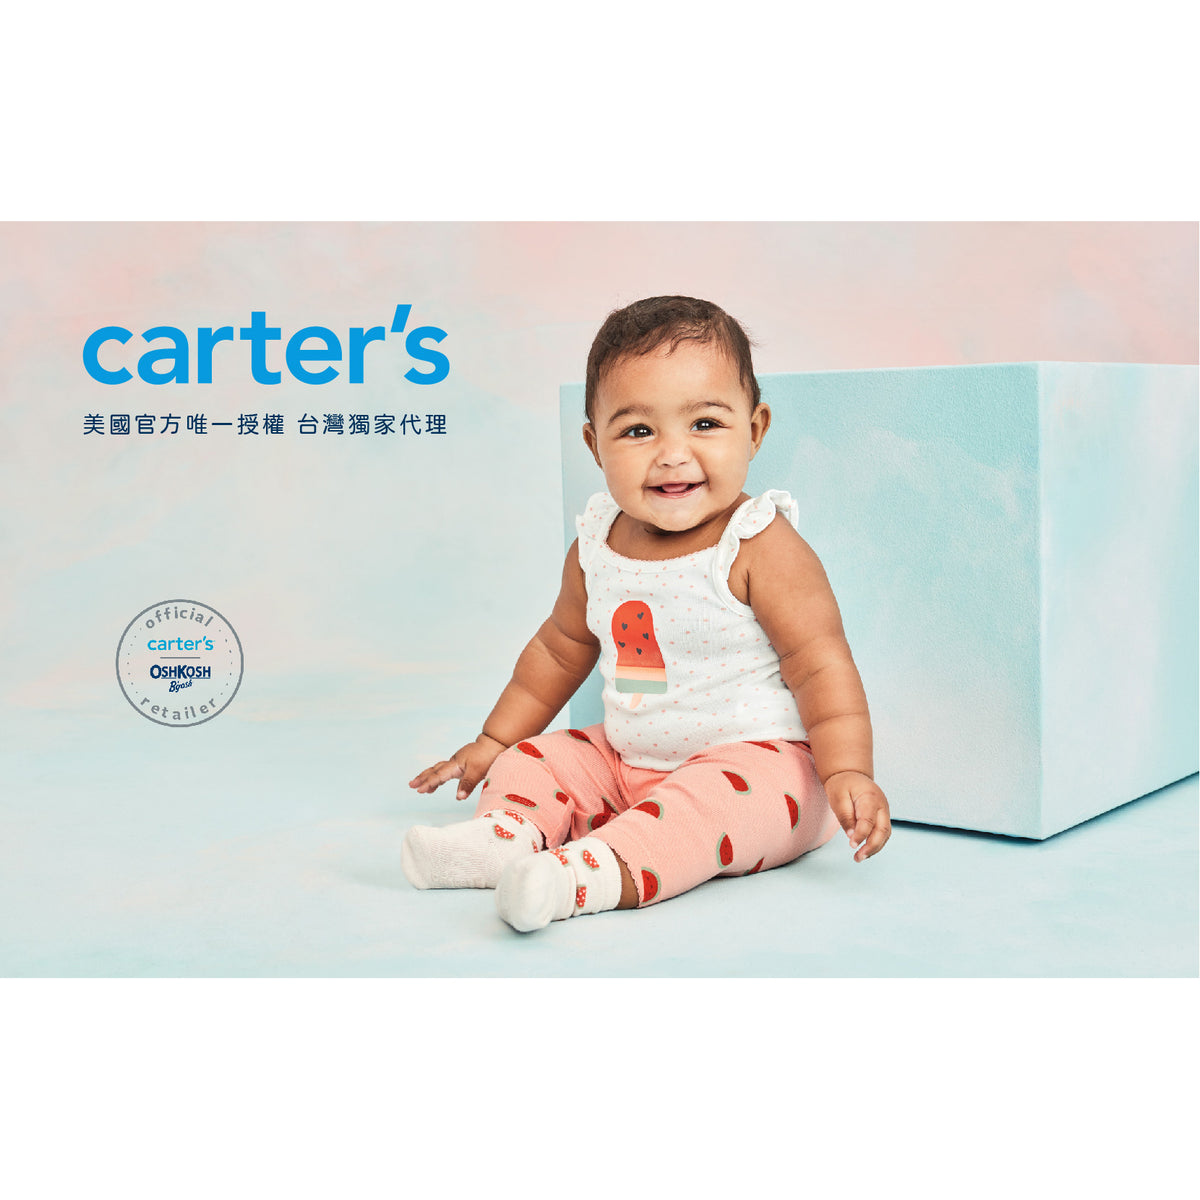 Carter's 香甜小蘋果2件組套裝(12M-24M)